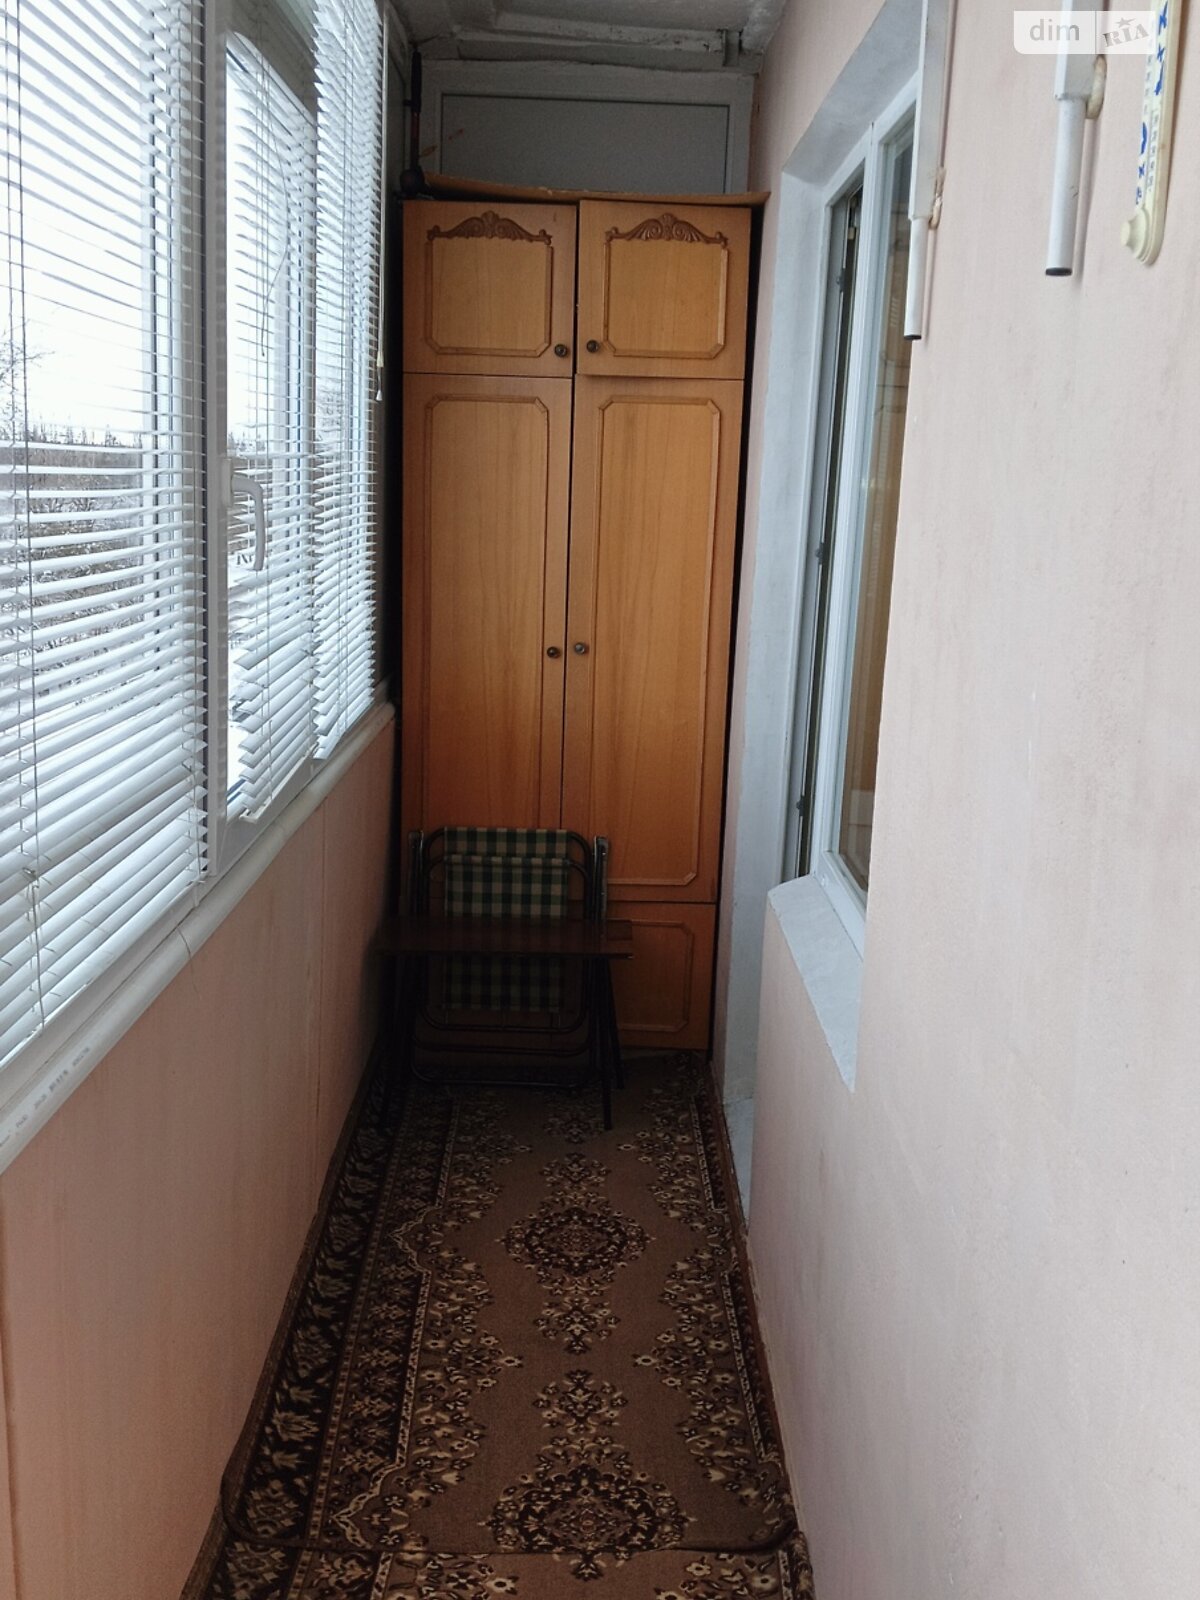 Продажа однокомнатной квартиры в Харькове, на ул. Плиточная, район ХТЗ фото 1